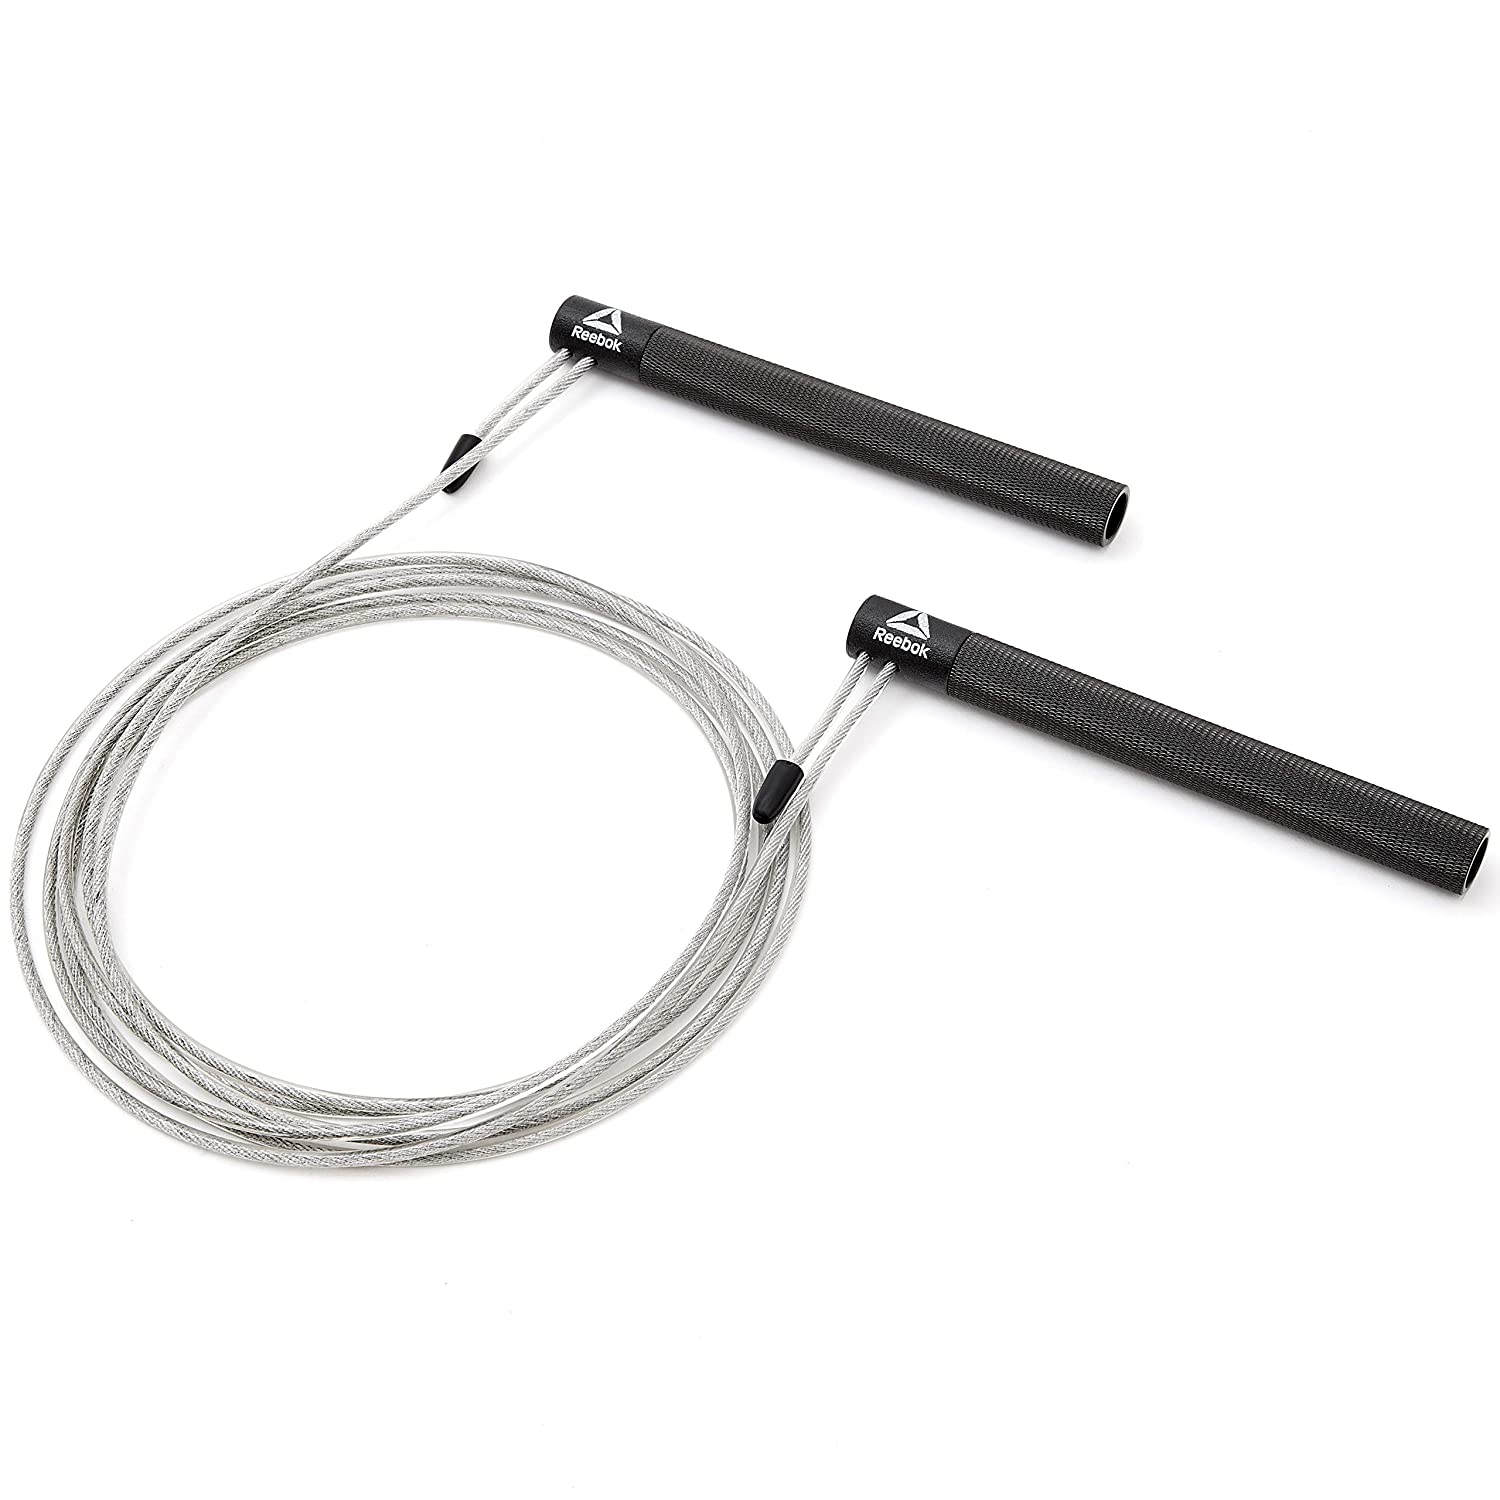 Reebok RARP-11082 Metal Skipping Rope (Silver) - Best Price online Prokicksports.com